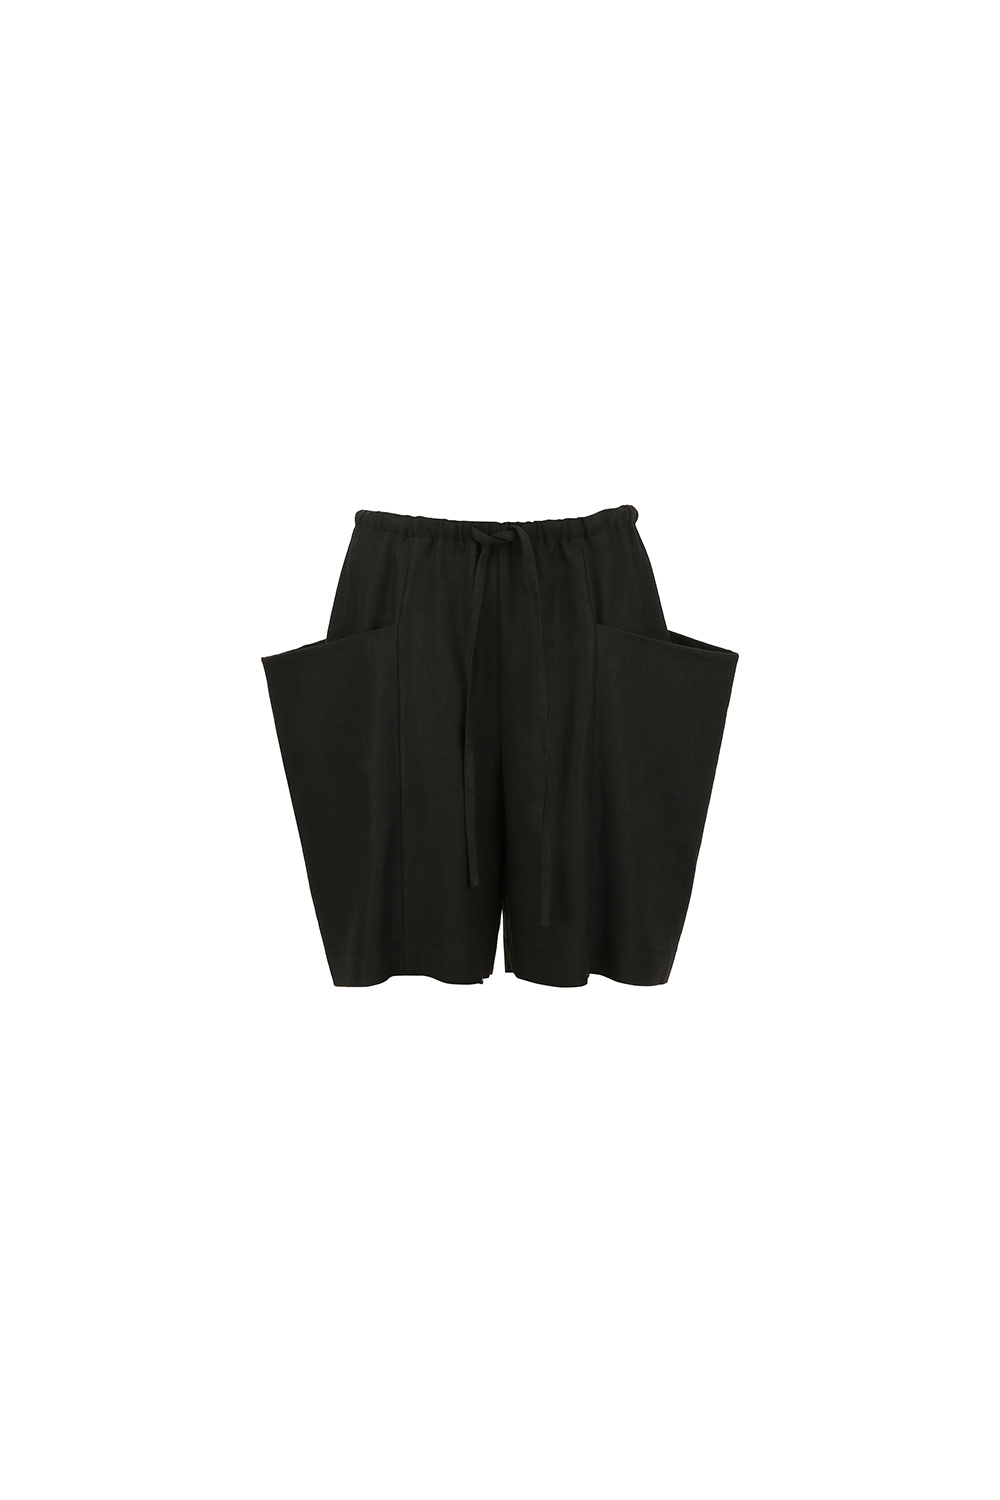 shorts khaki color image-S2L11